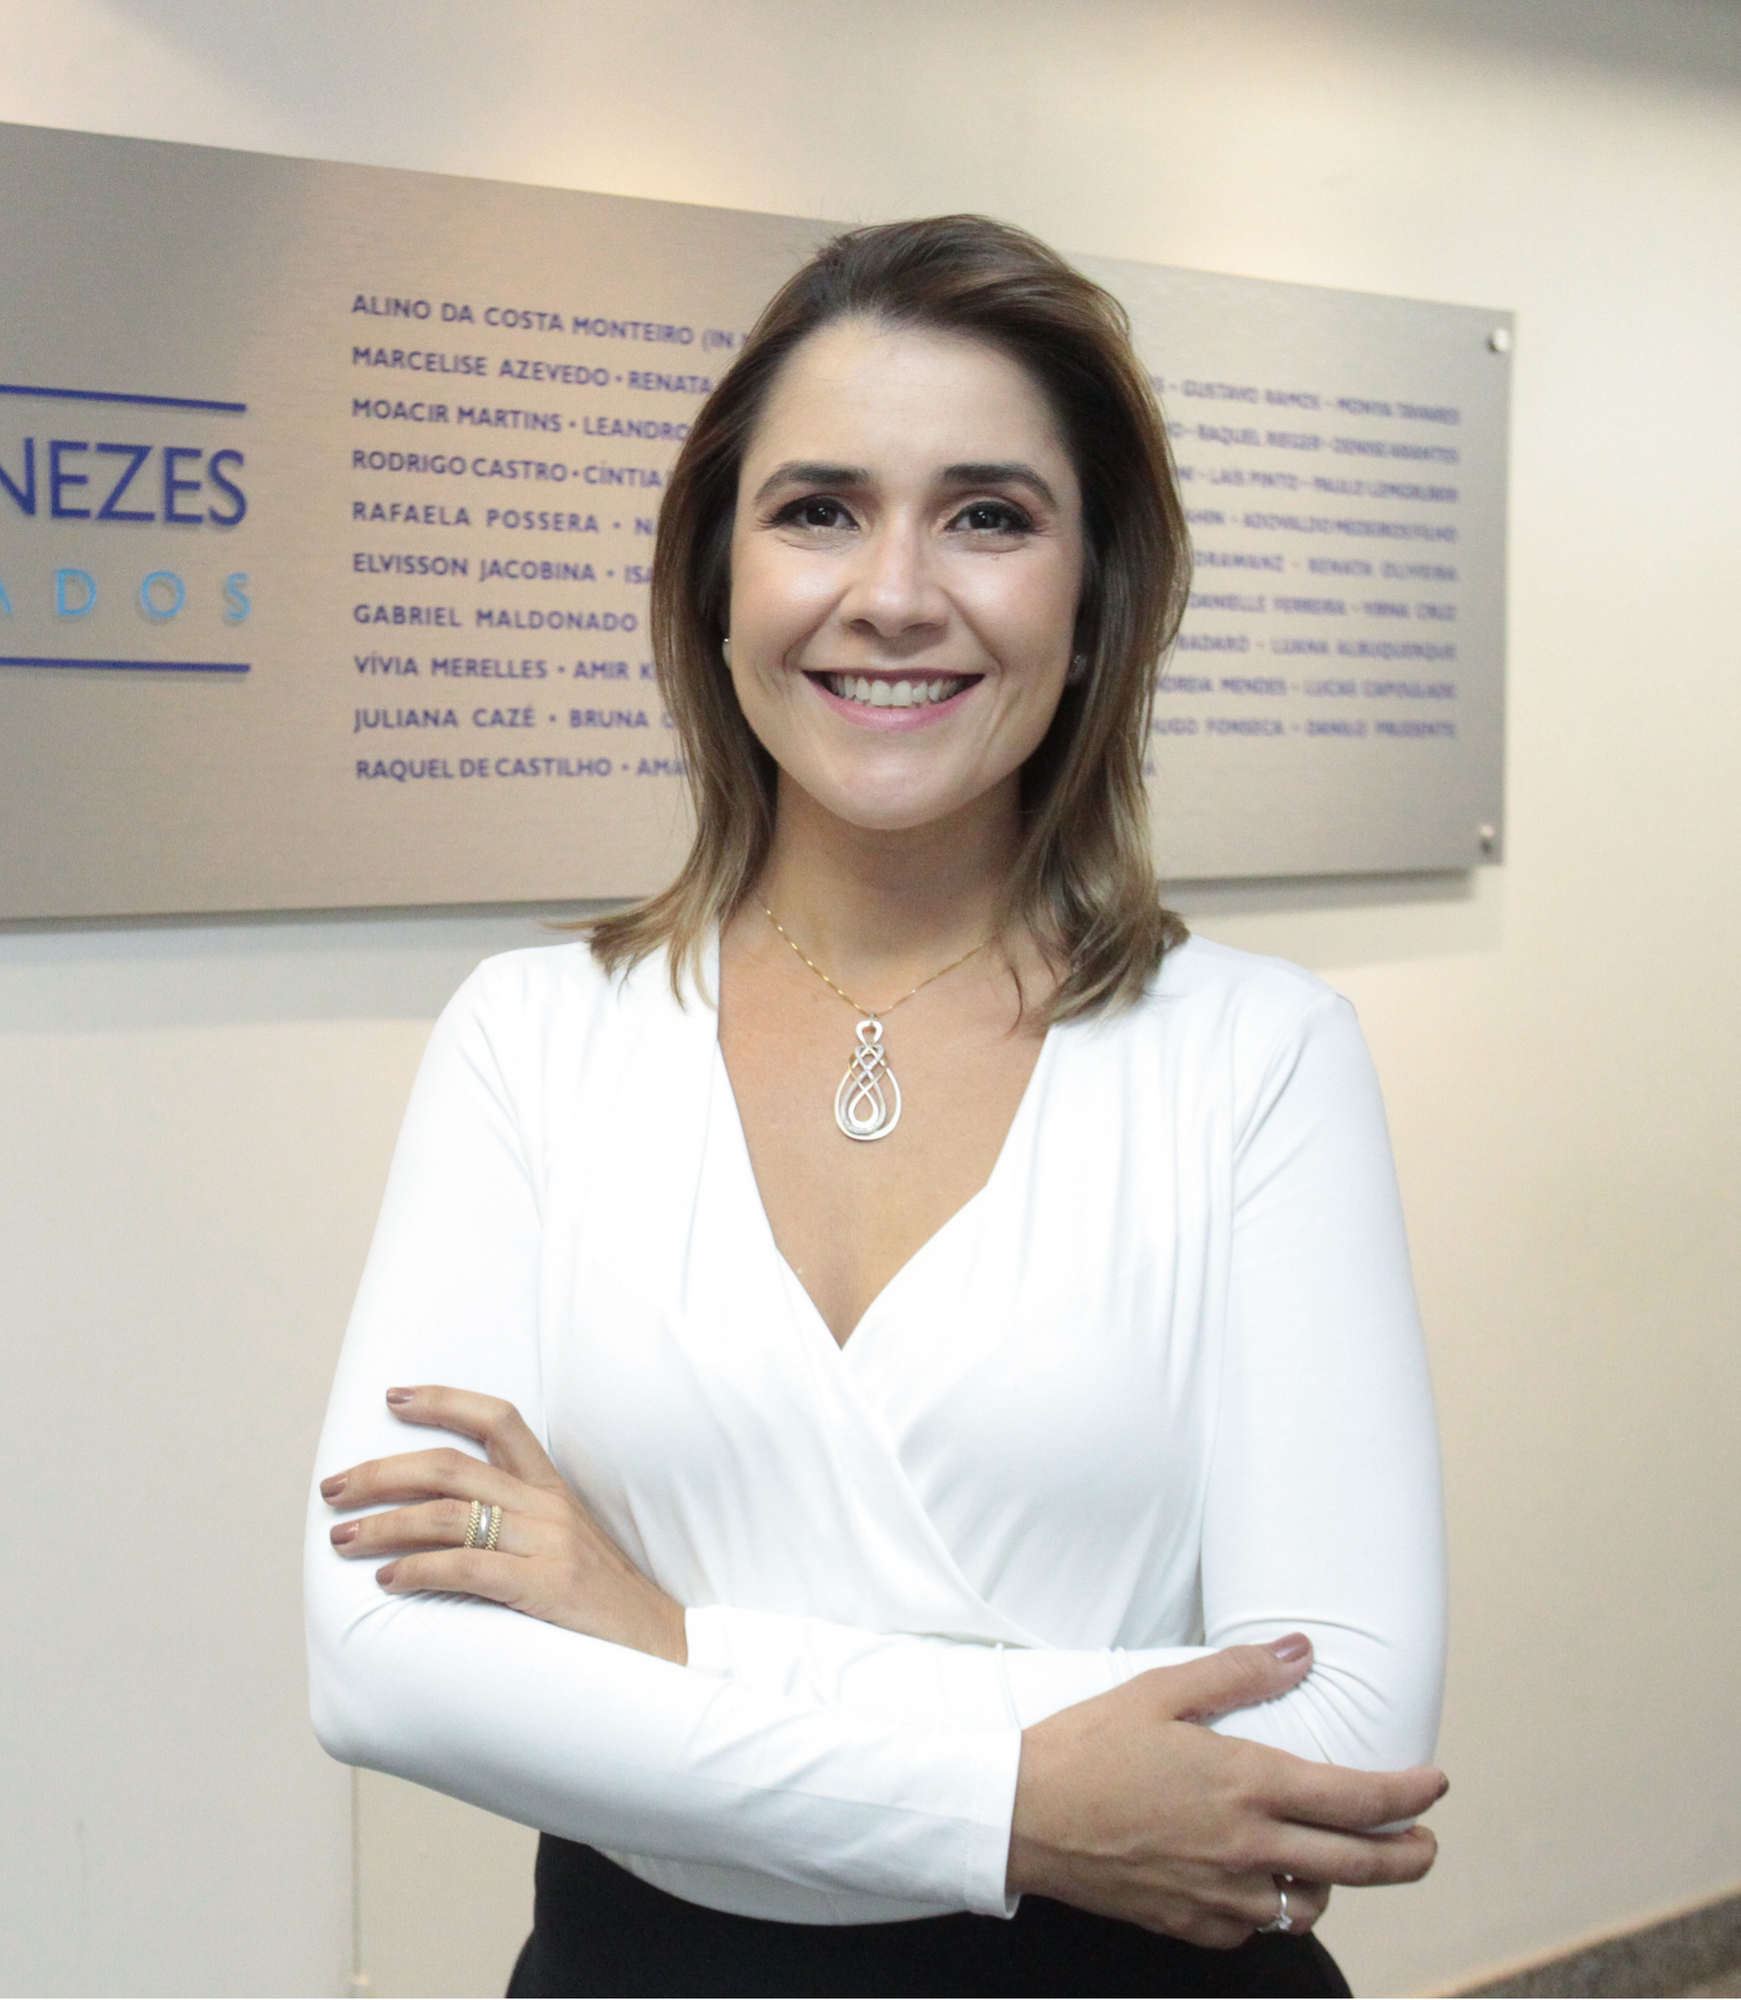 Denise Arantes Santos Vasconcelos